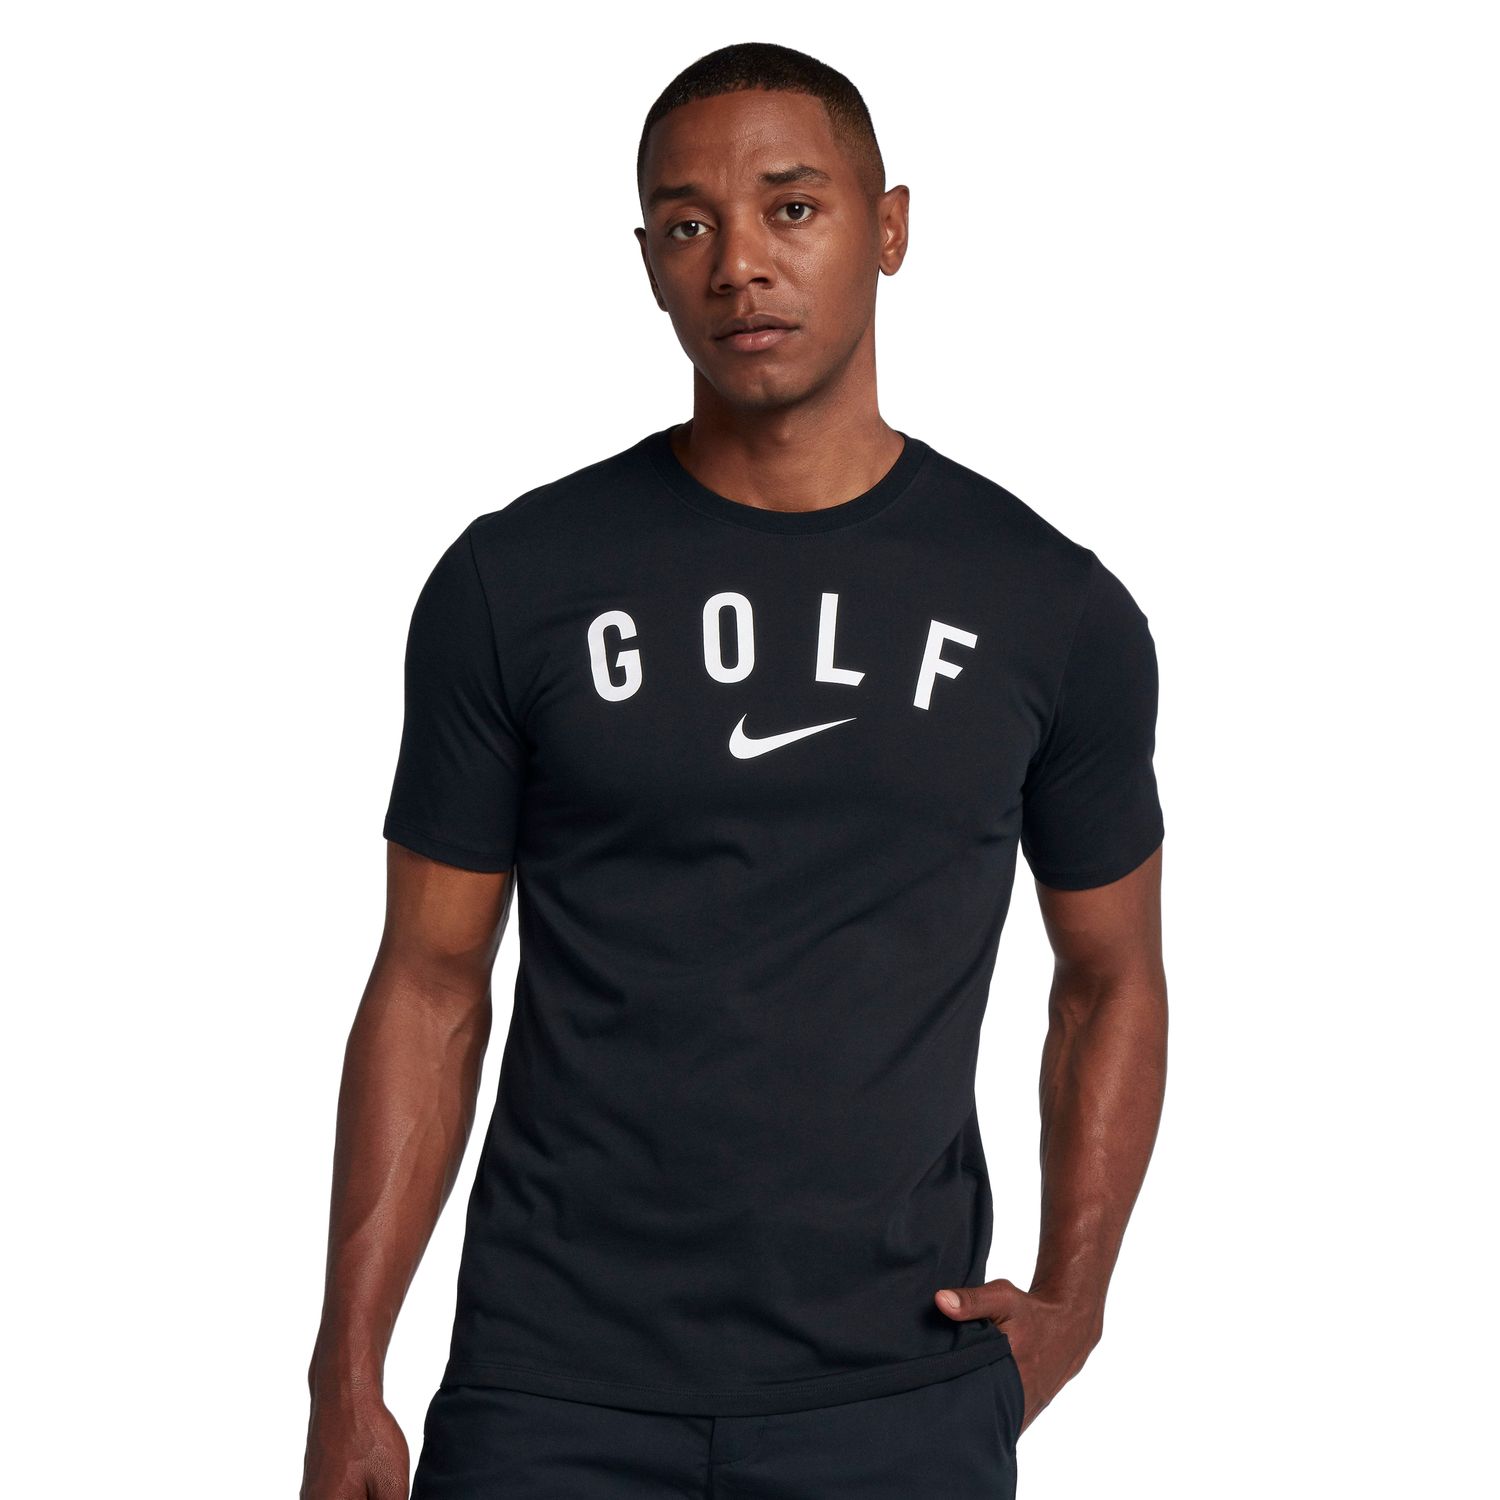 Men's Nike Dri-FIT Golf Graphic Tee